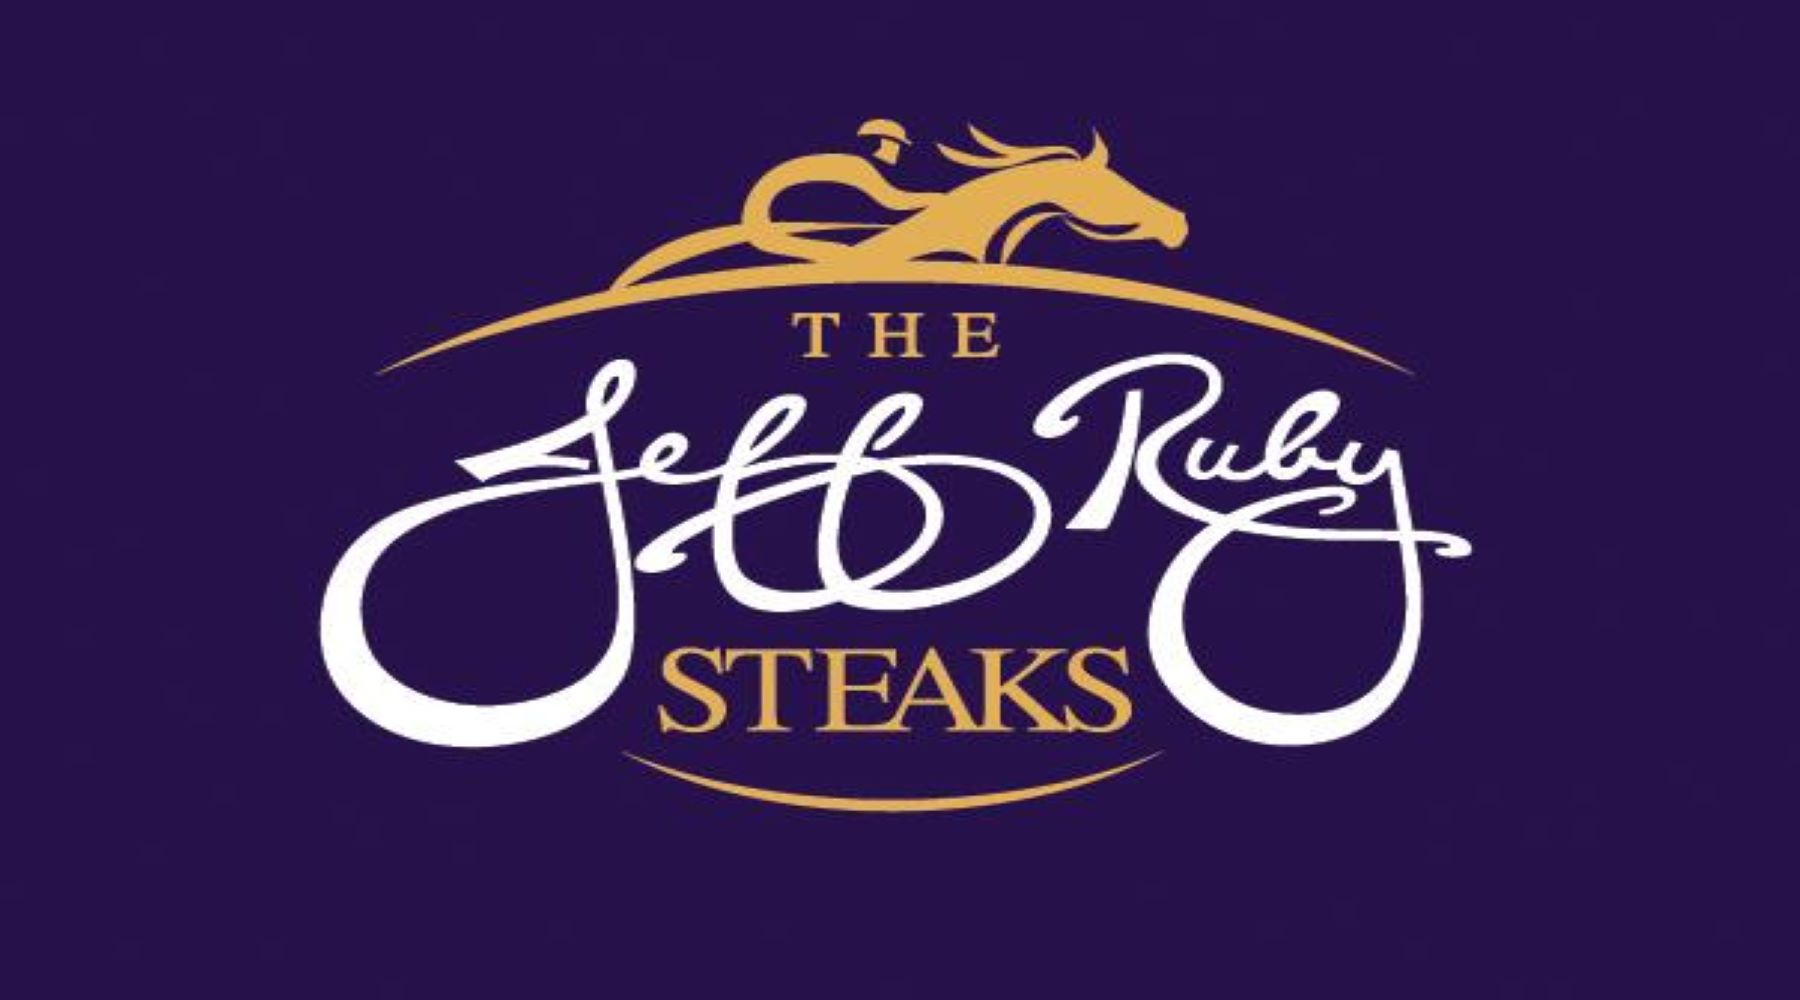 Jeff_Ruby_Steaks_Logo_RGB